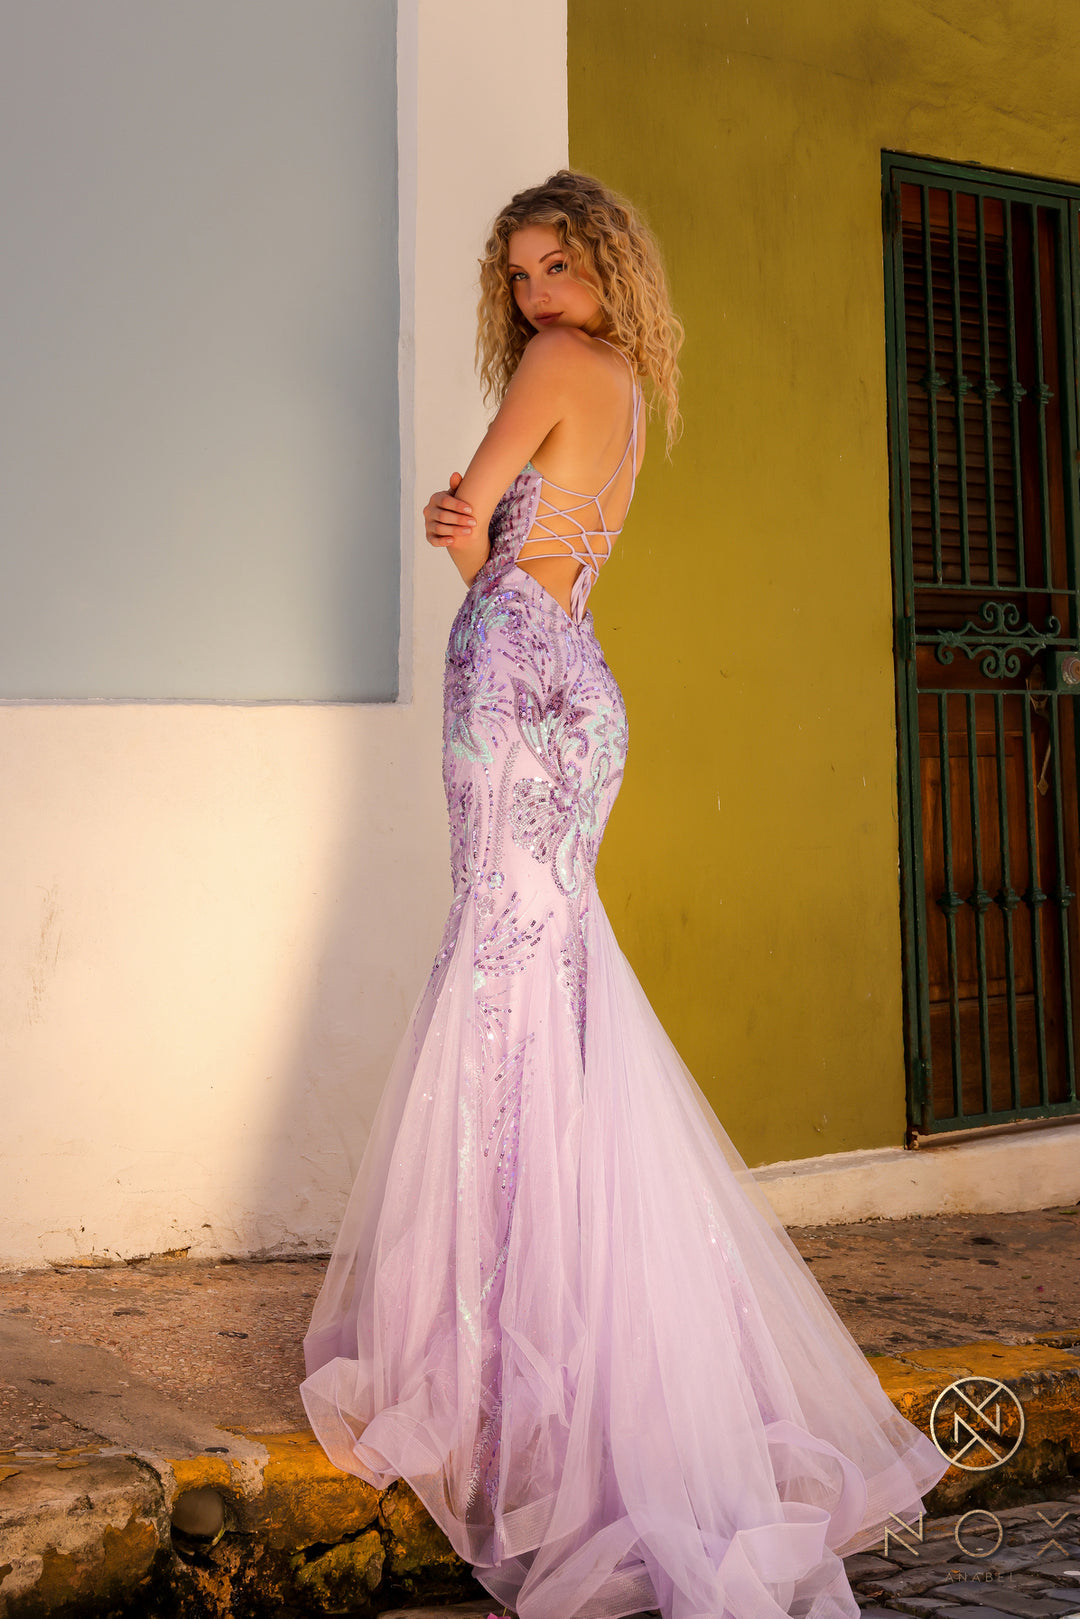 Sequin Print Sleeveless Mermaid Dress by Nox Anabel C1416